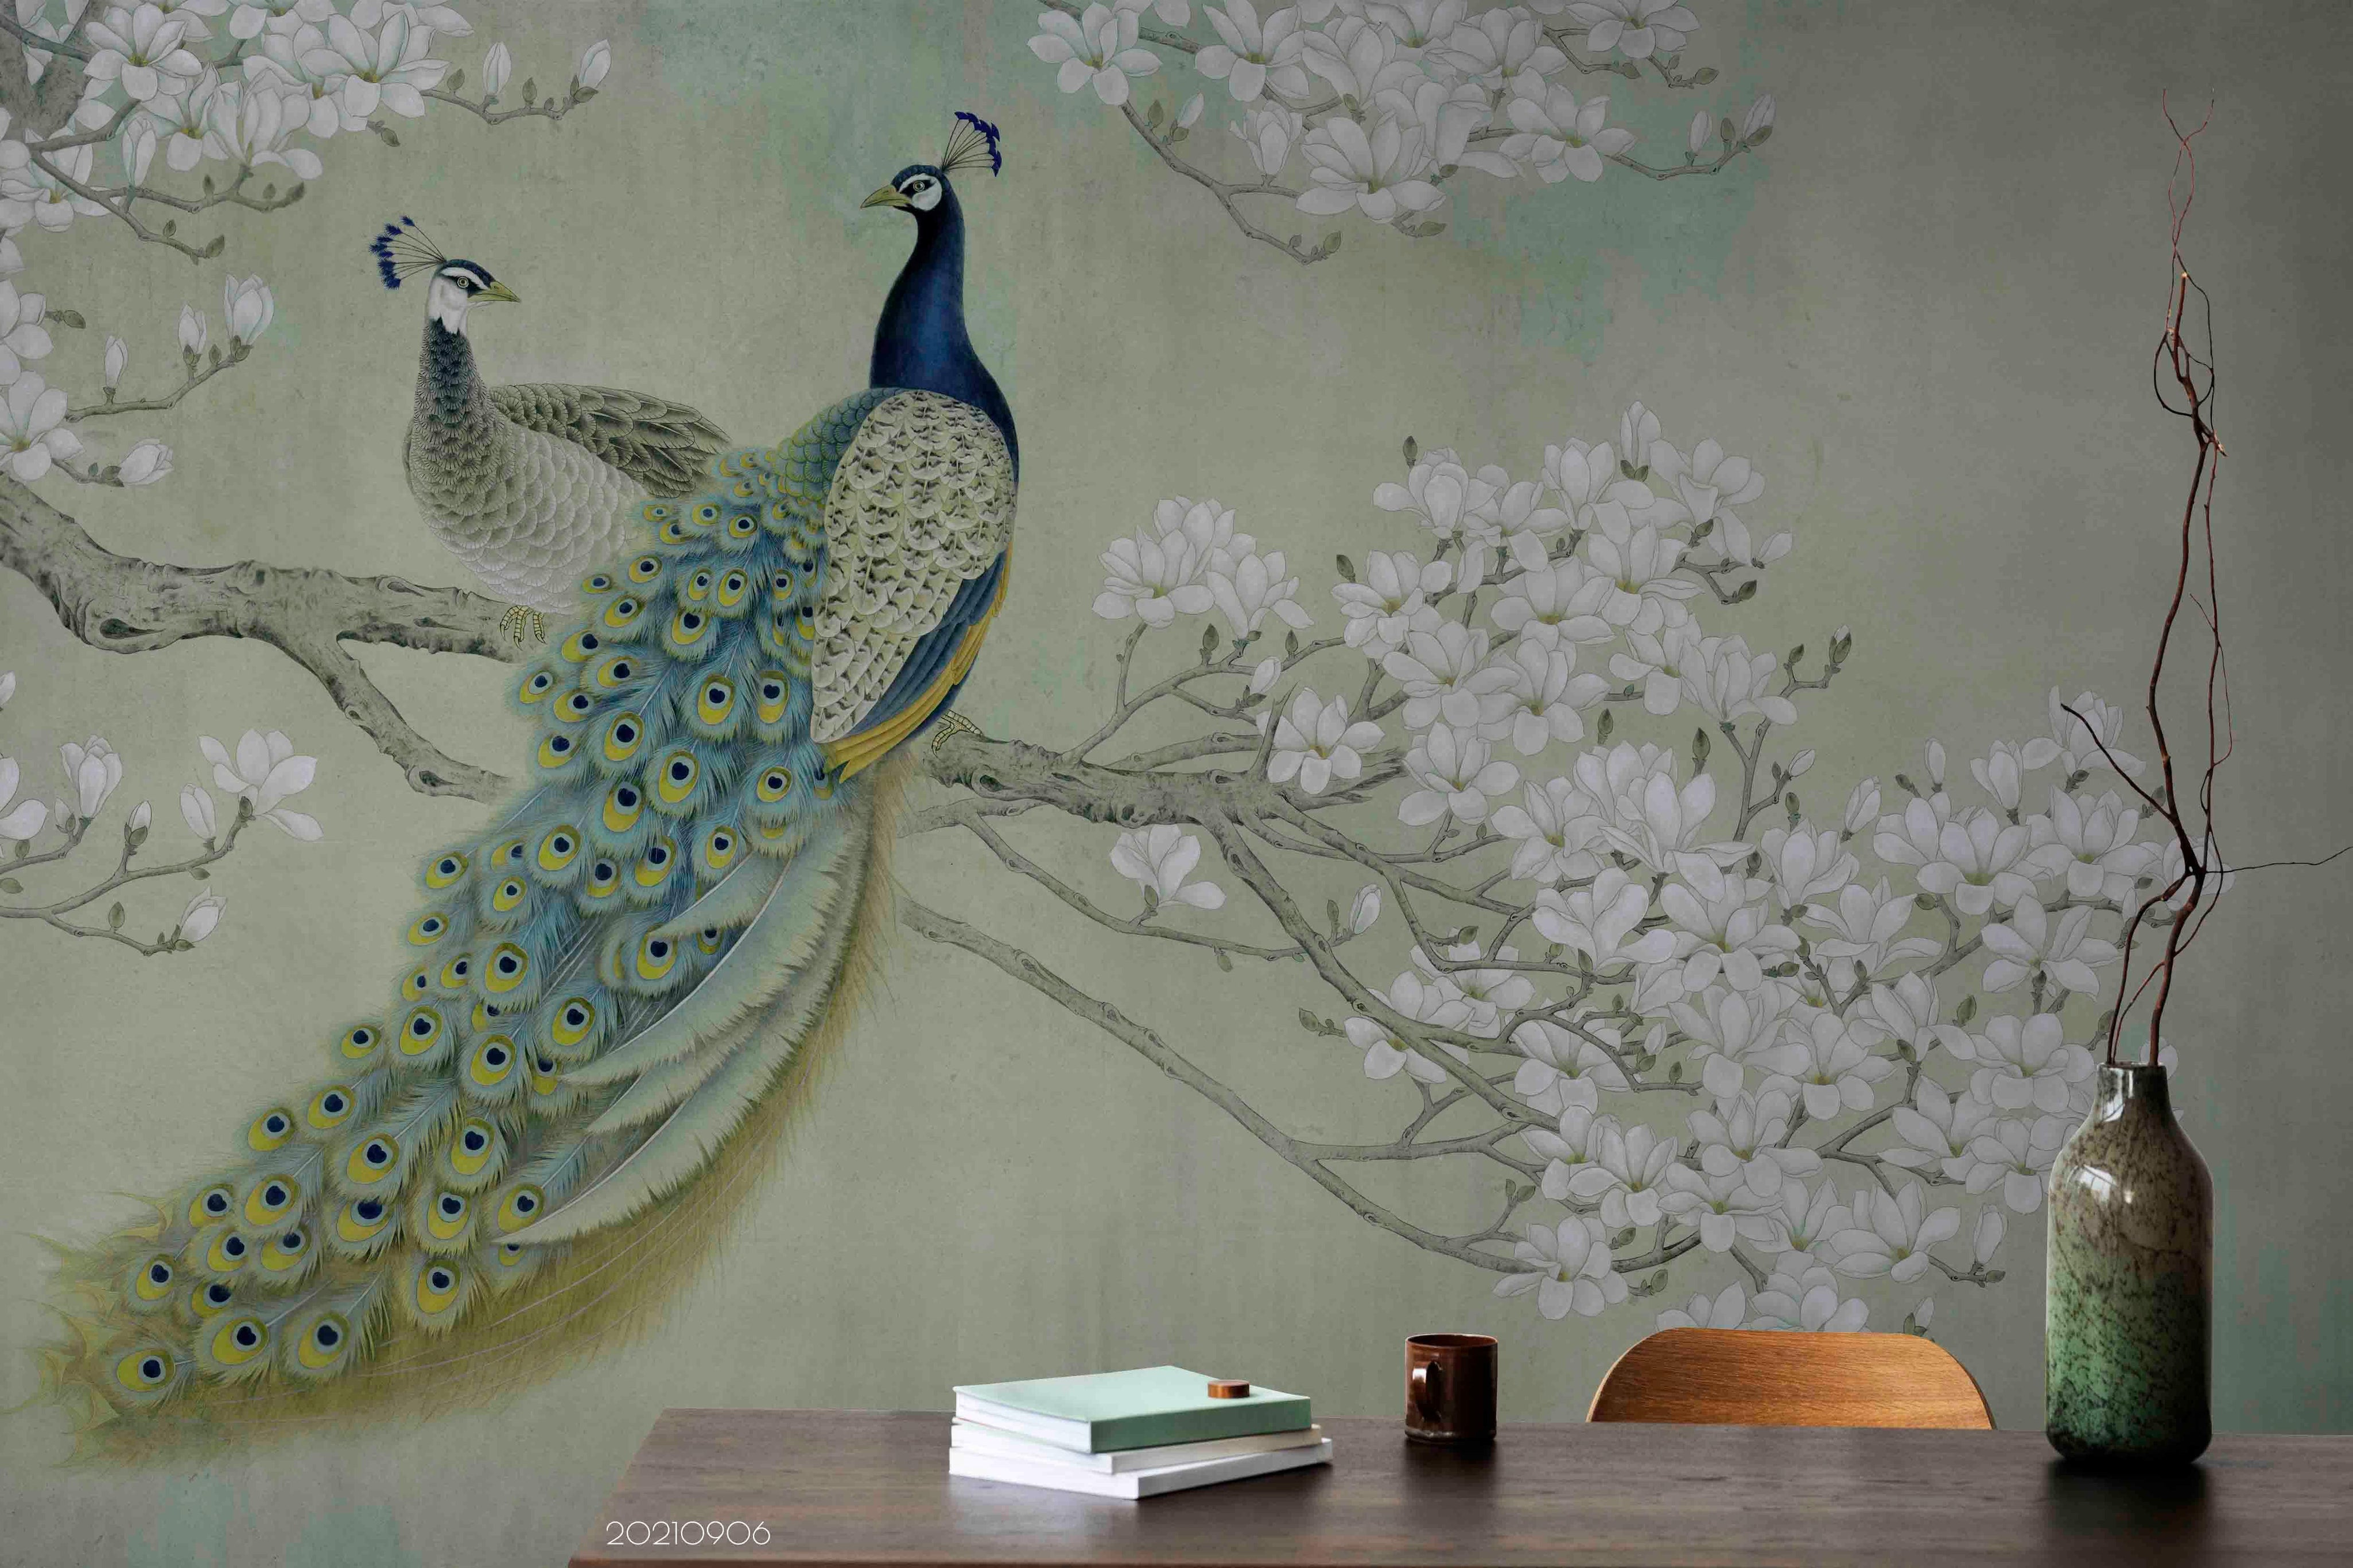 3D Animal Peacock Floral Wall Mural Wallpaper LQH 596- Jess Art Decoration